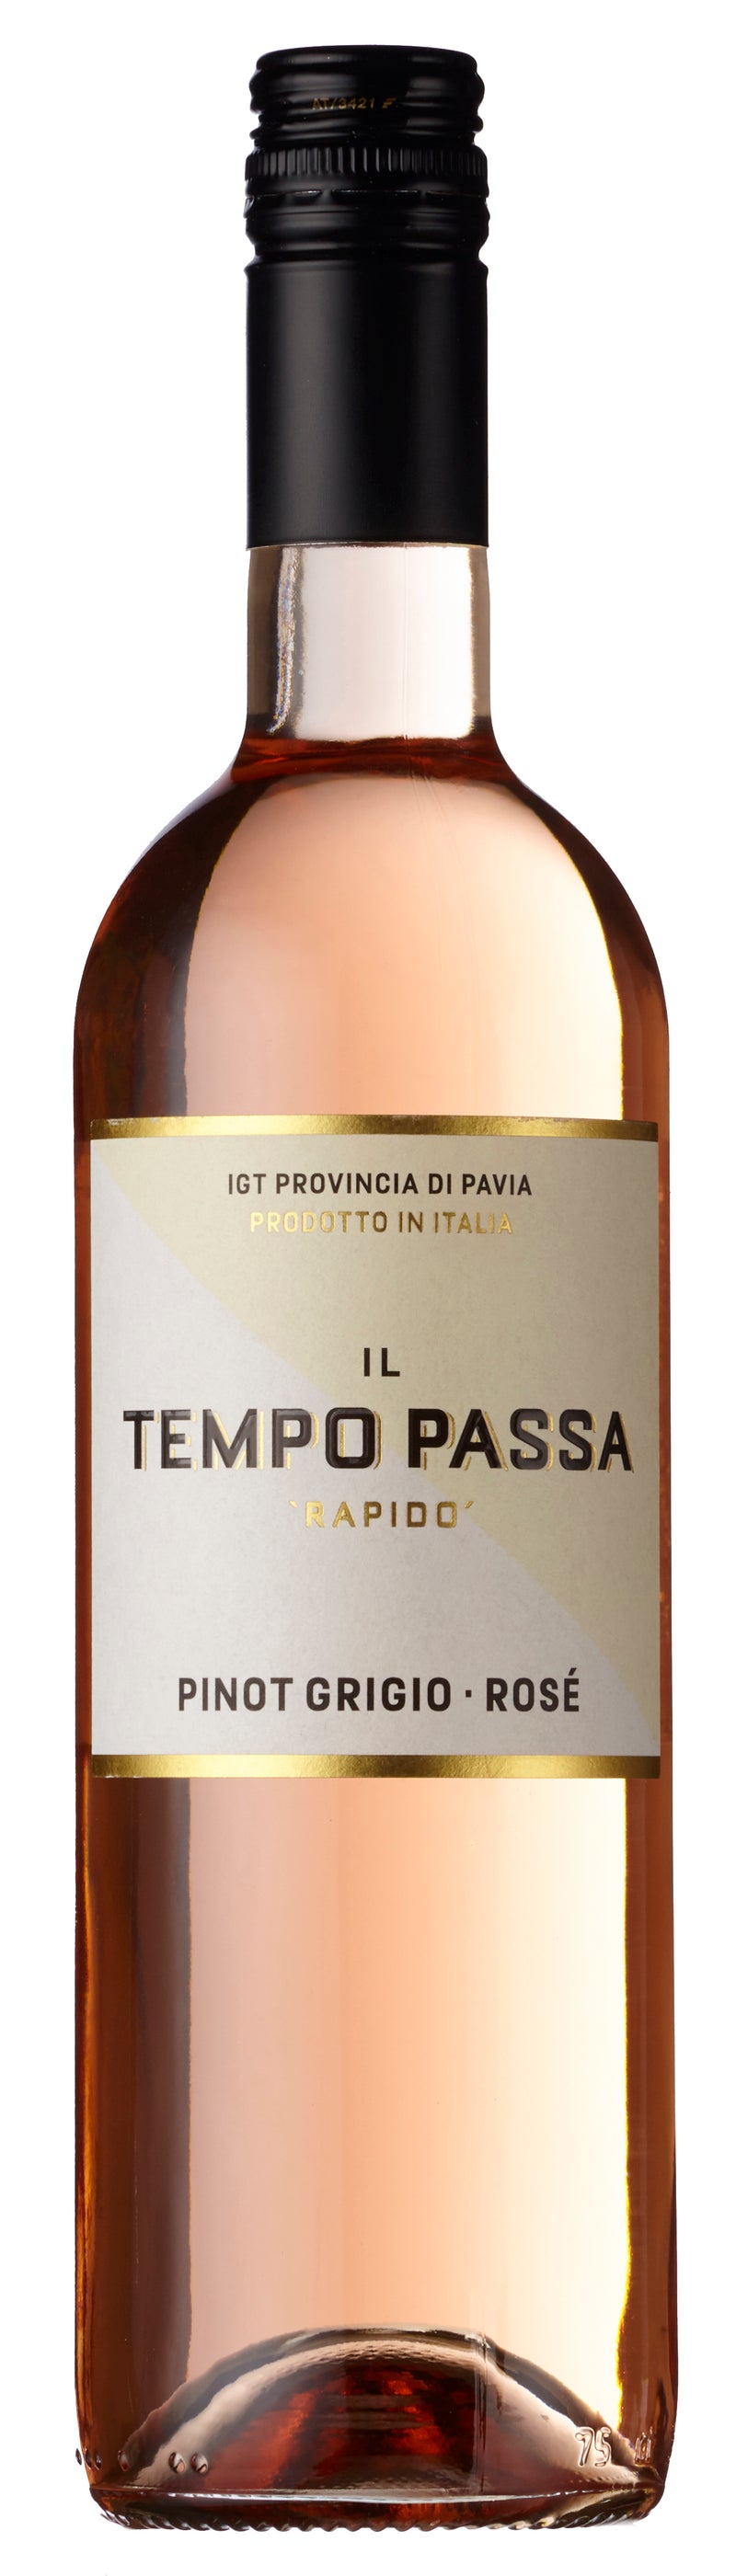 Pinot Grigio Rose Tempo Passa 750ml